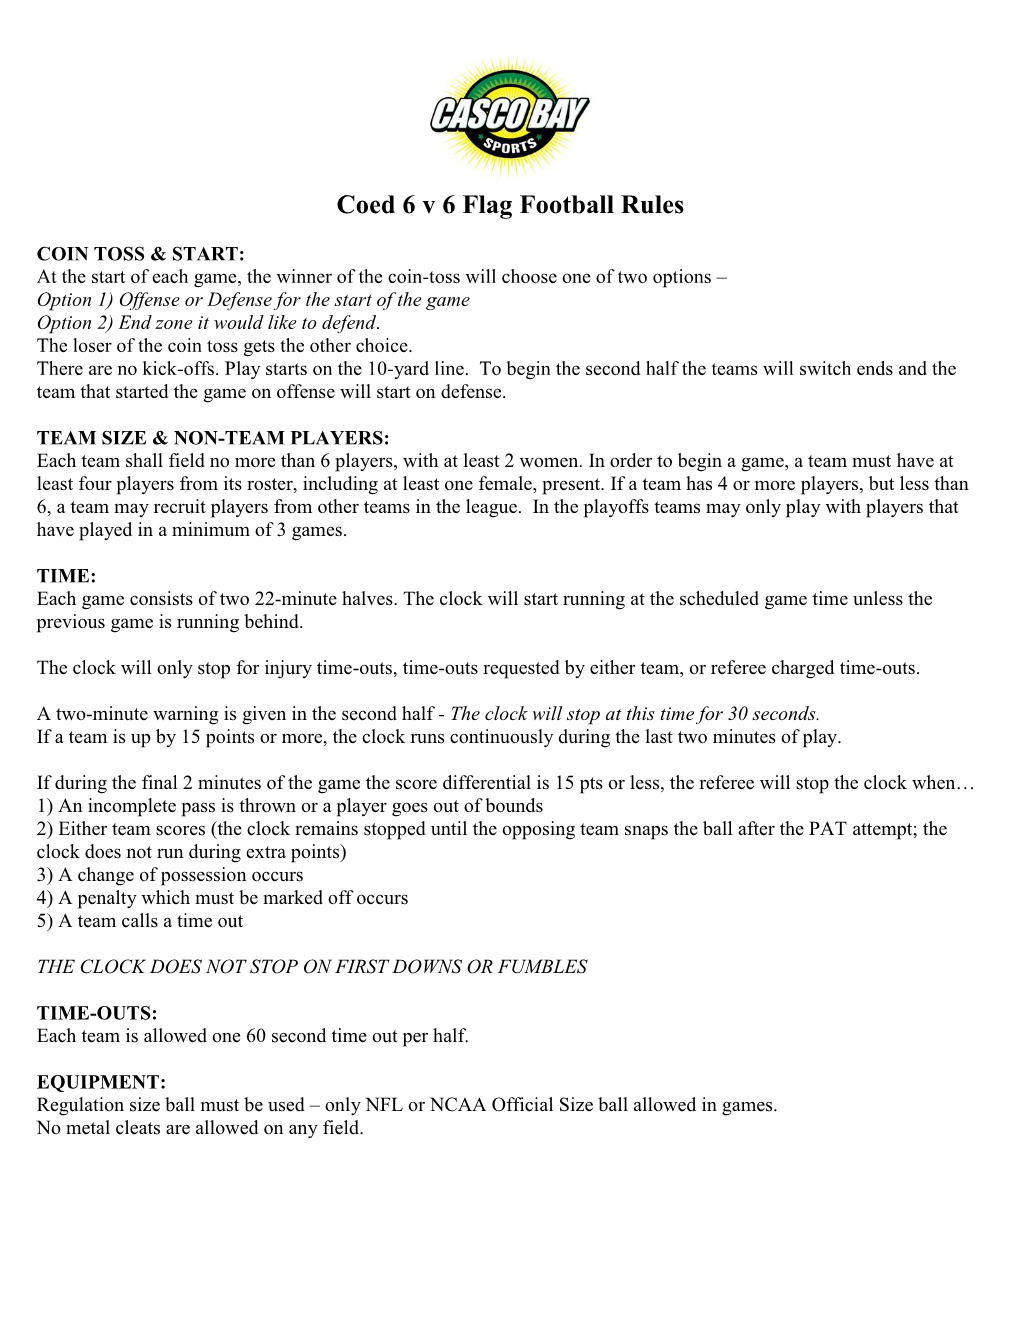 Coed 6 V 6 Flag Football Rules